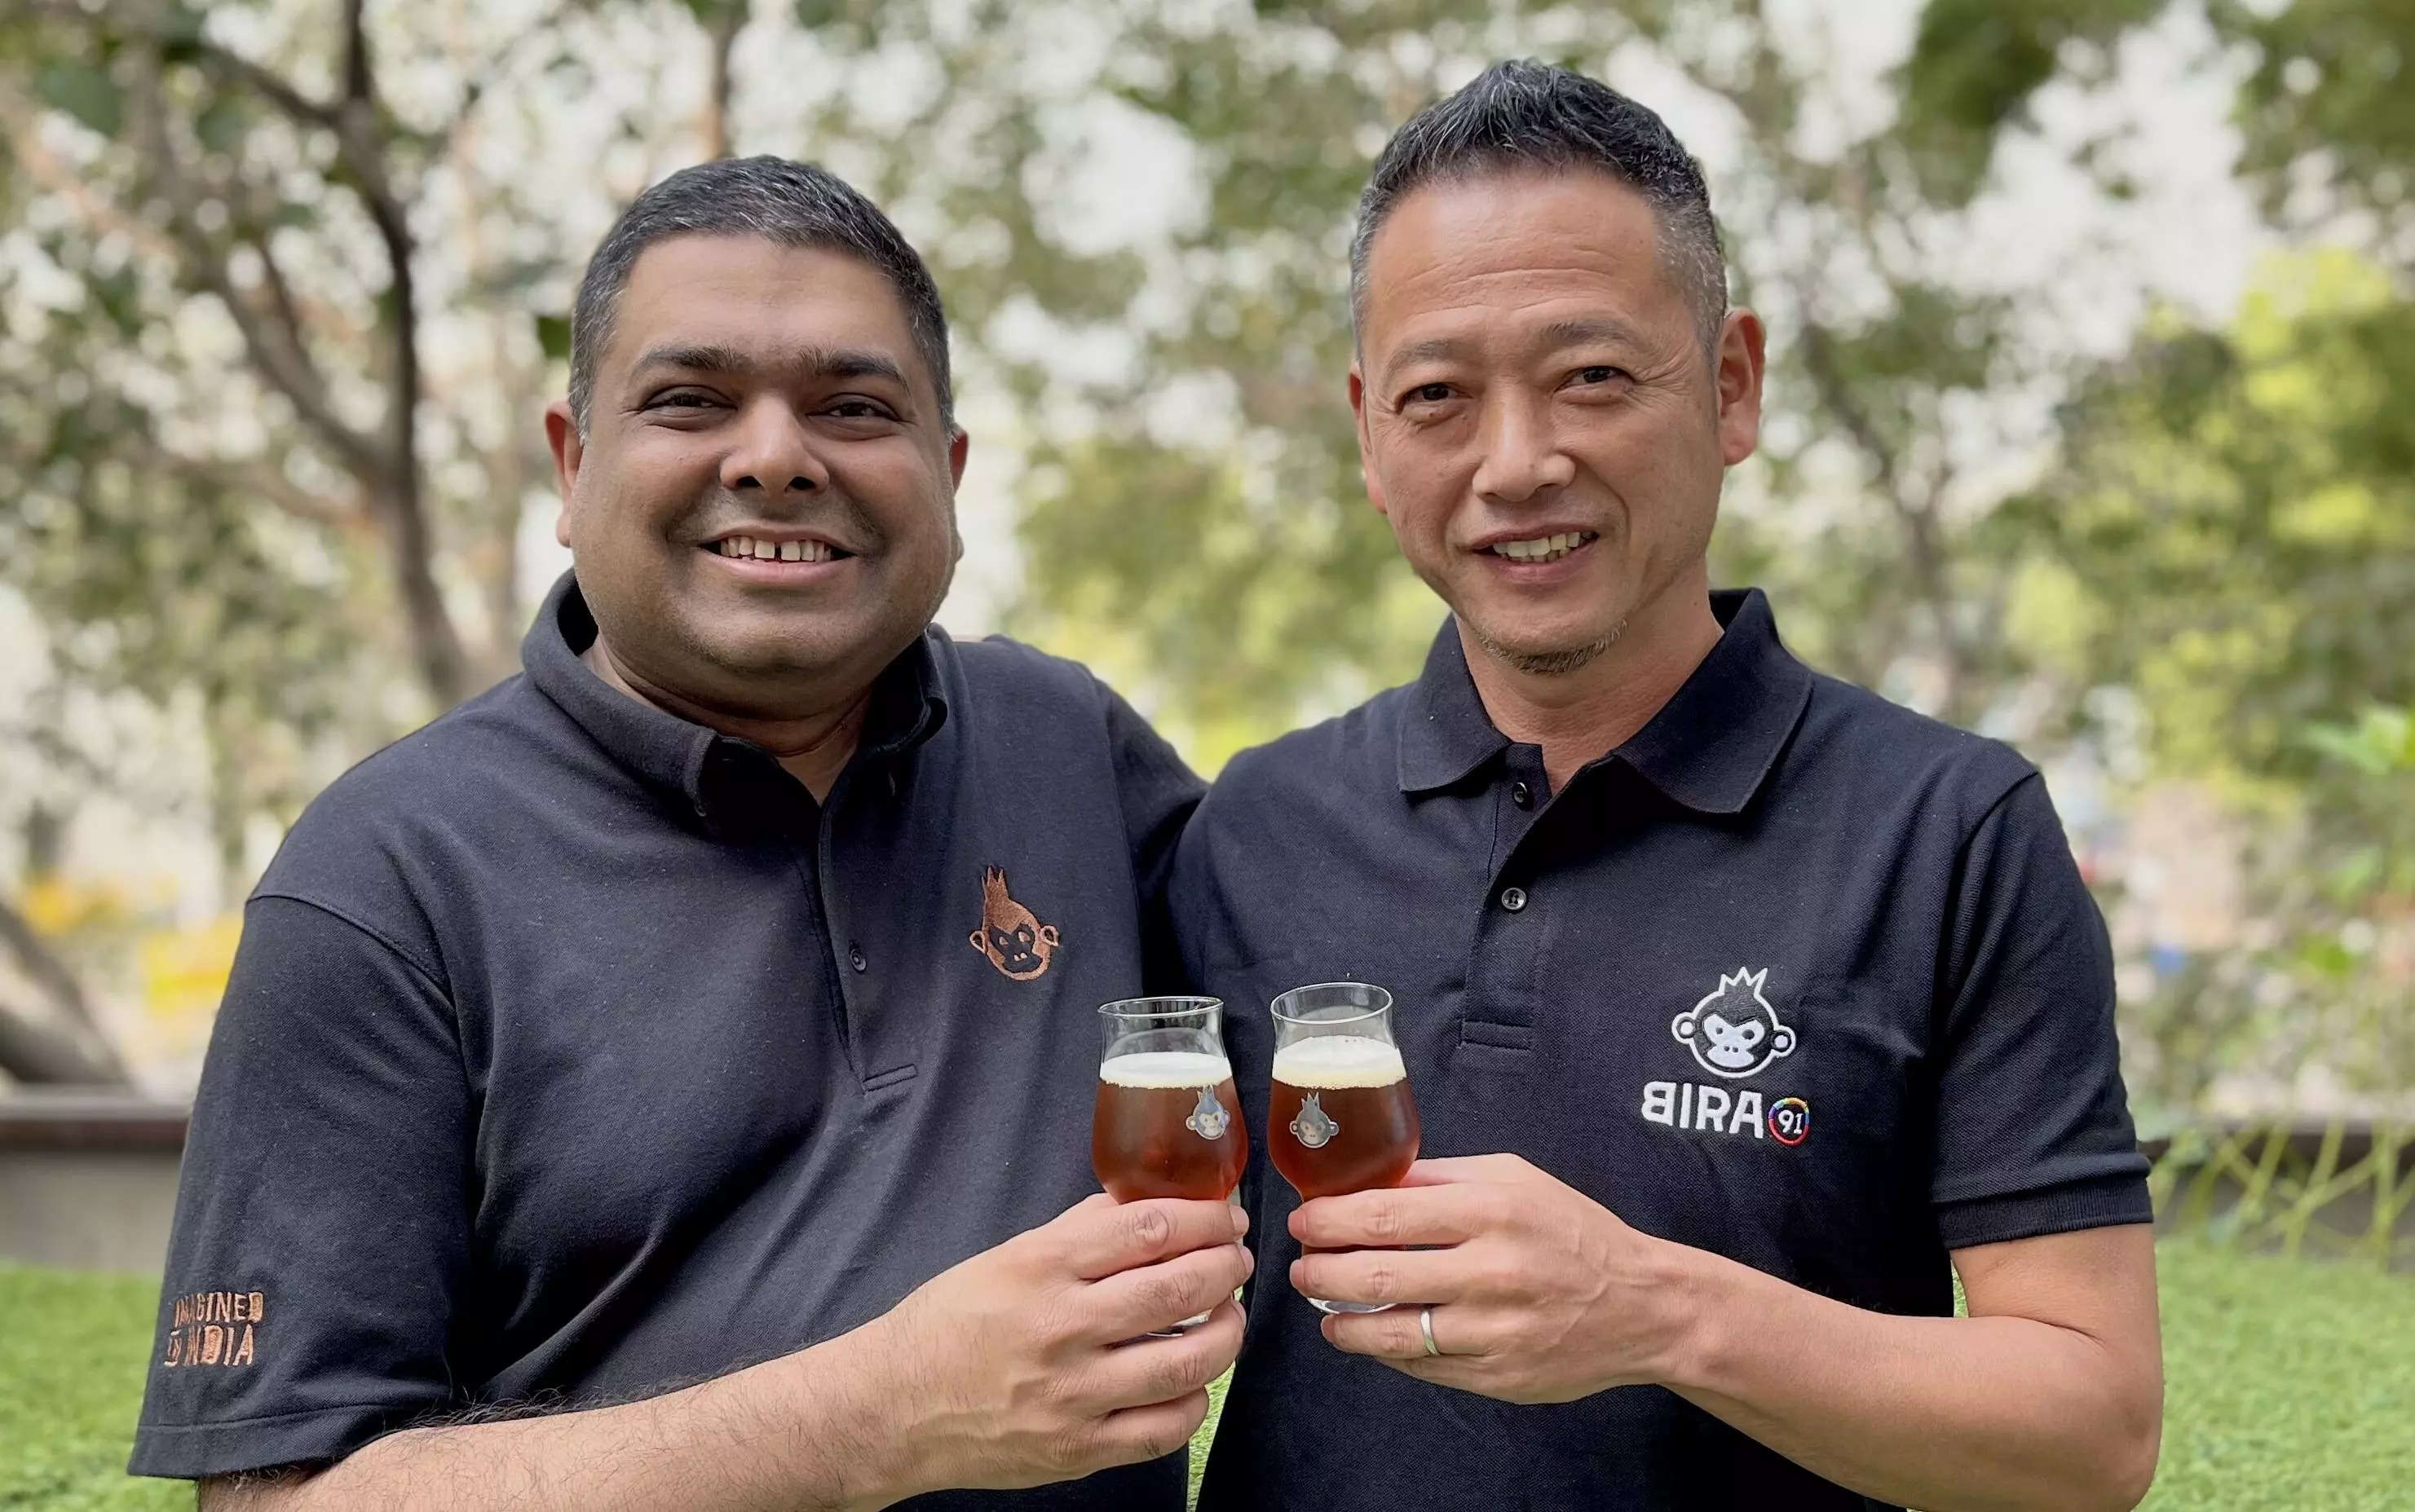 Bira 91 raises $70 million from Japanese beer company Kirin Holdings